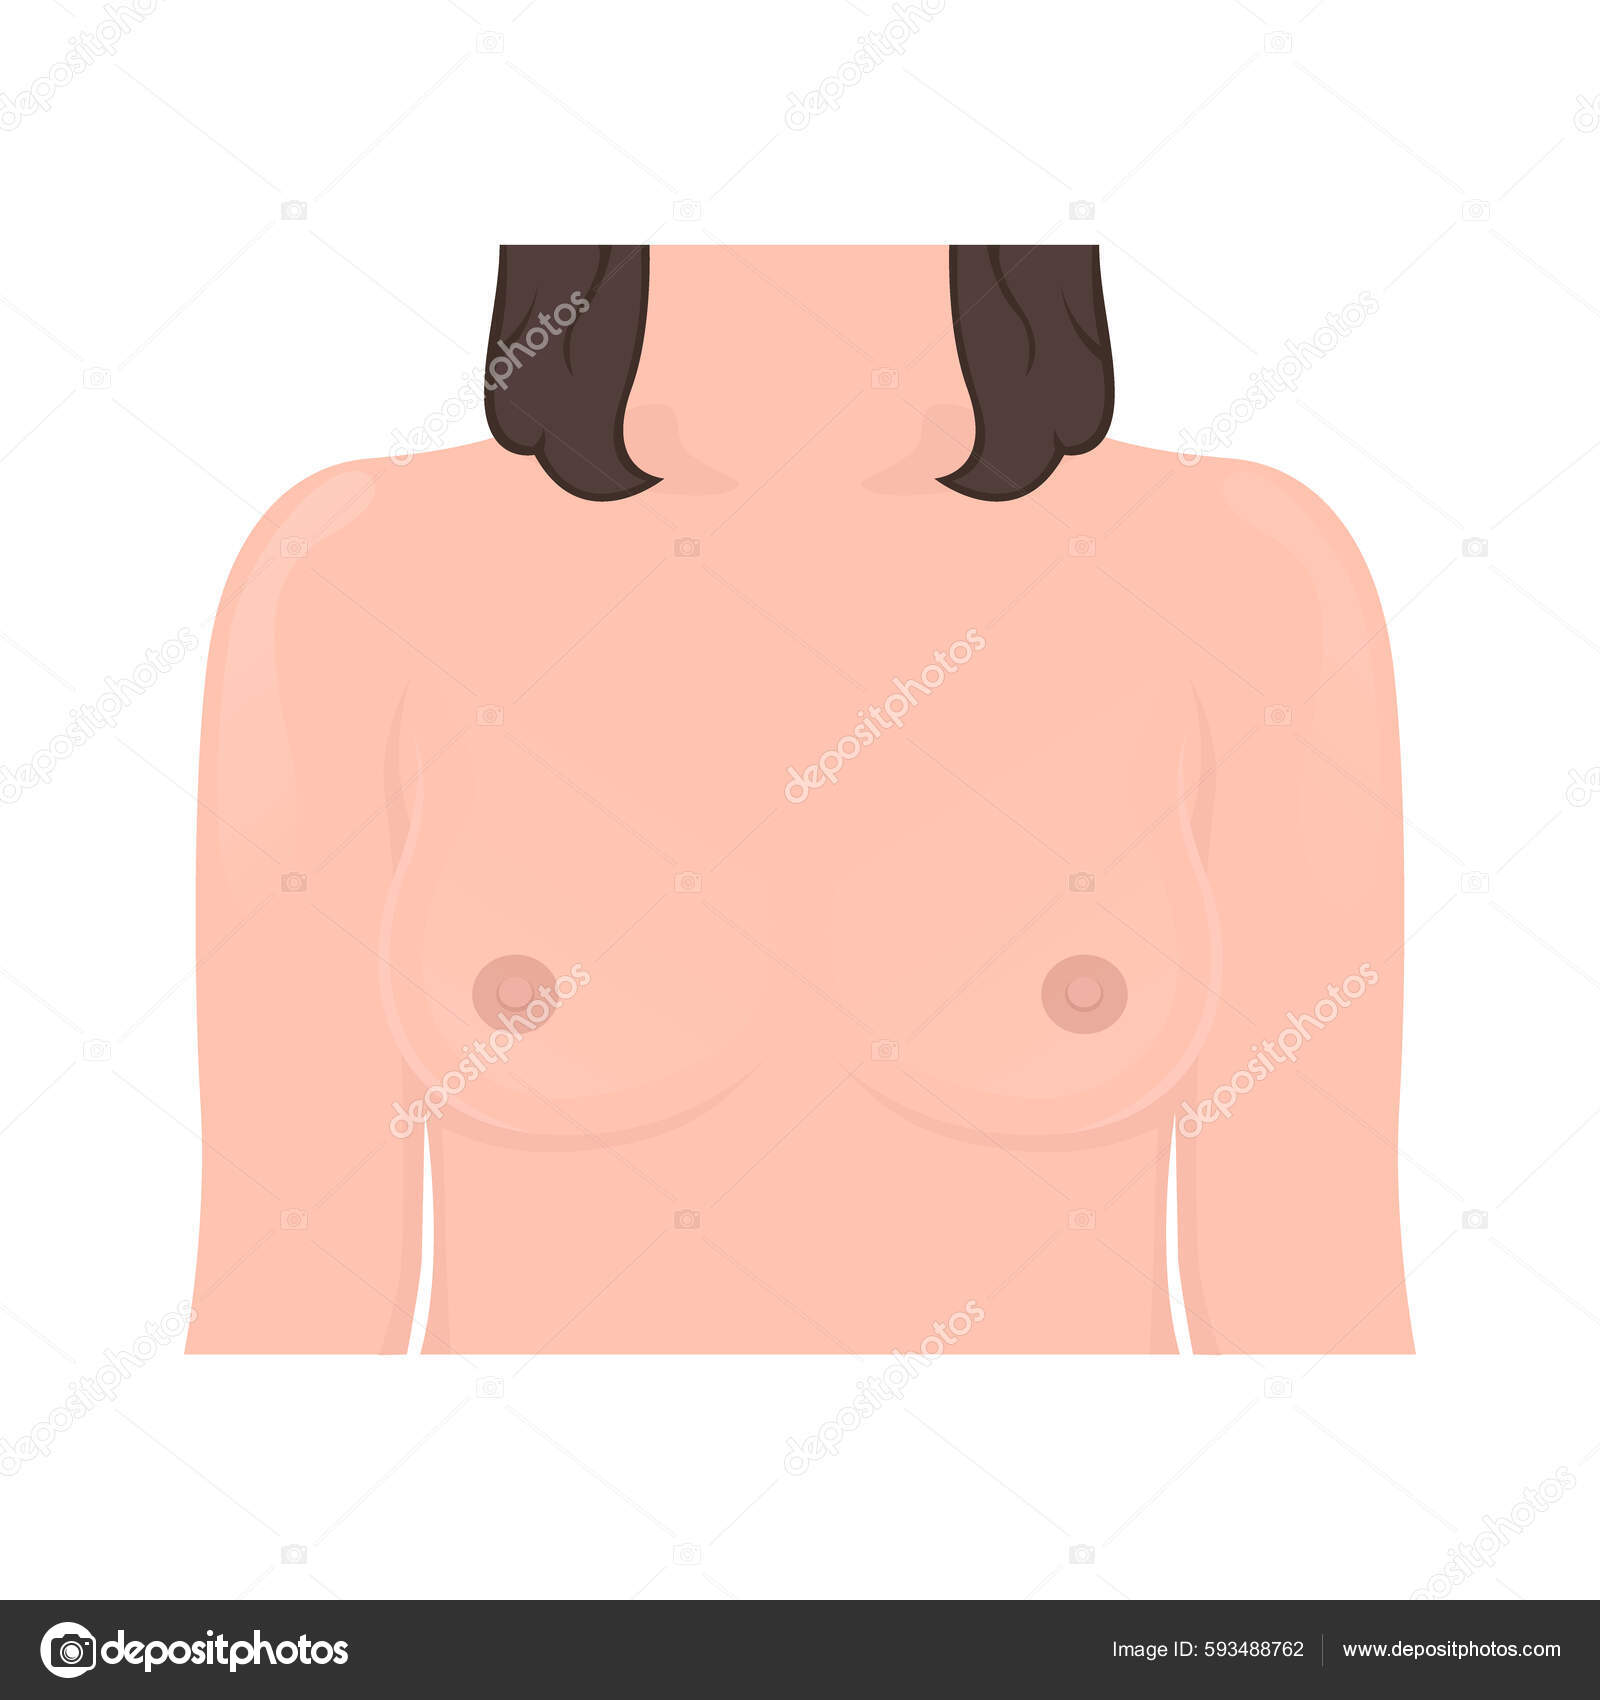 Woman Chest Breast Illustration vetor(es) de stock de ©airtafolo@gmail.com  593488762